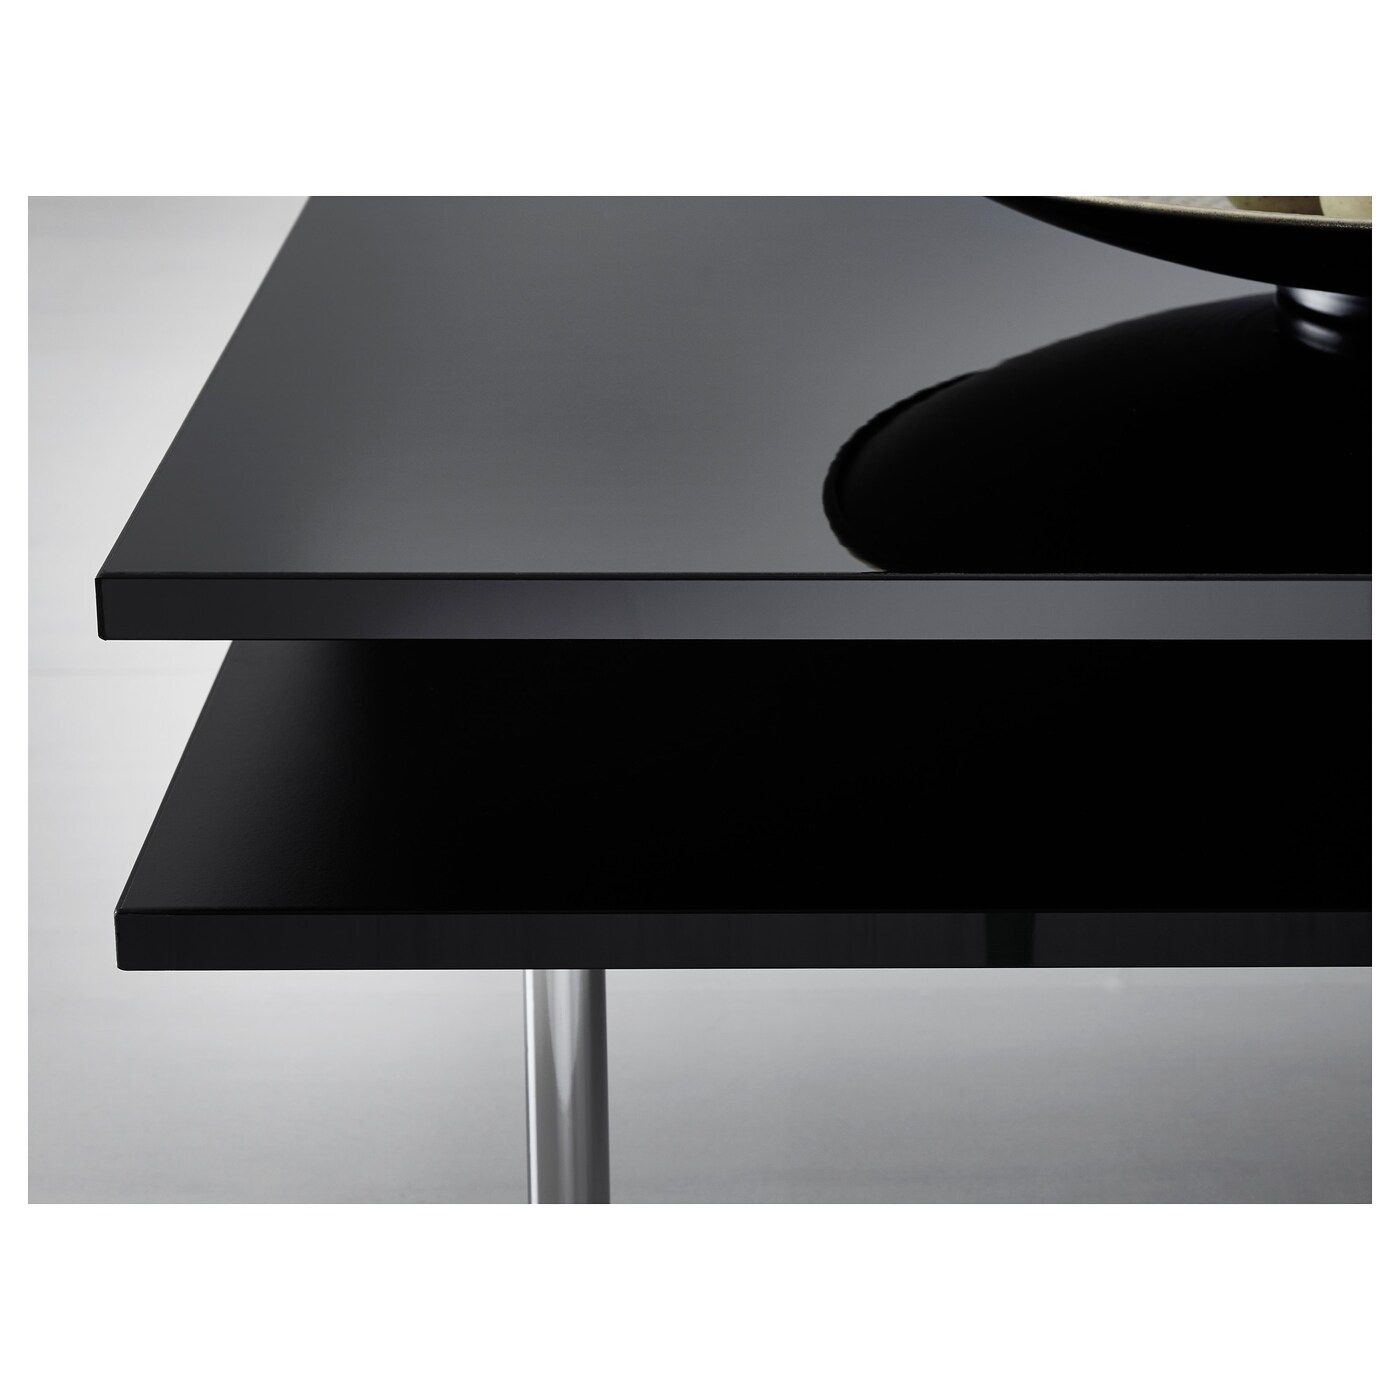 Tofteryd Coffee Table, High Gloss Black, 95x95 Cm – Ikea With High Gloss Black Coffee Tables (Photo 8 of 15)